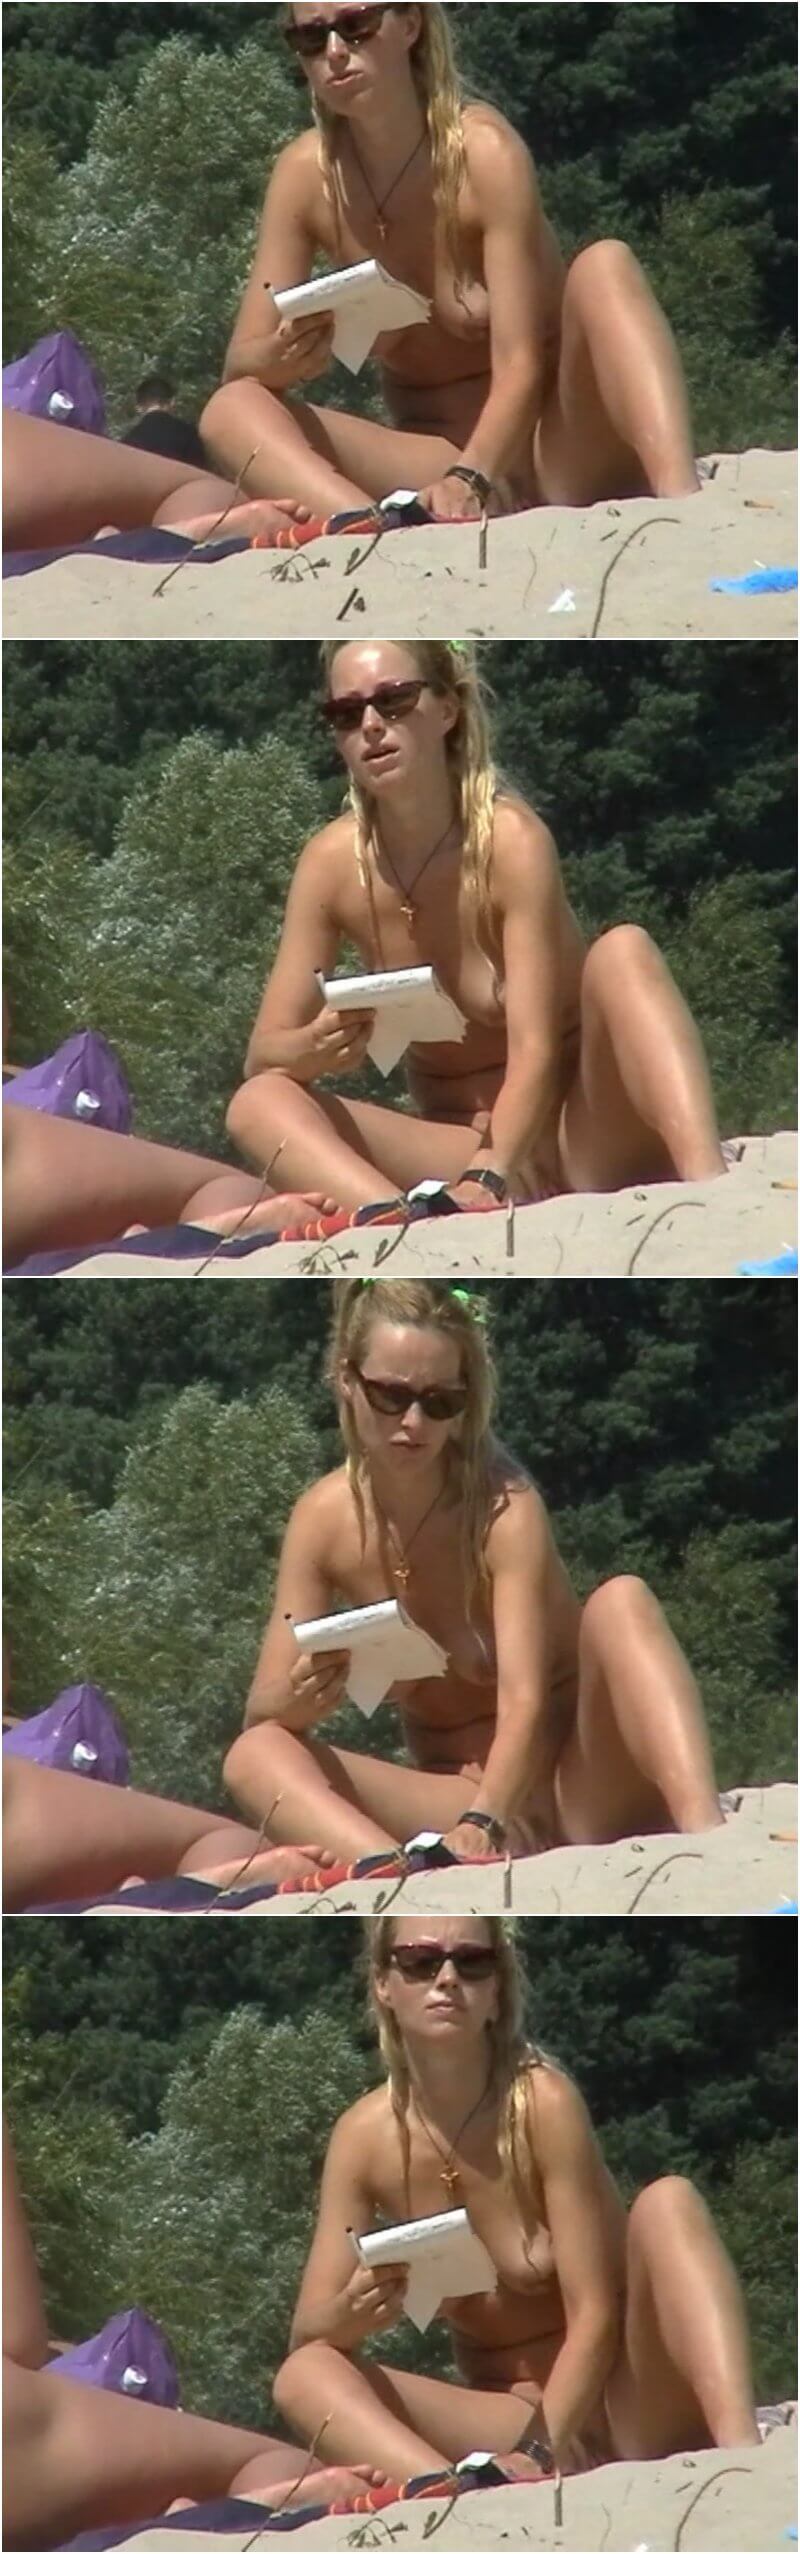 Nude beach, upskirt, voyeur, spying cams pic